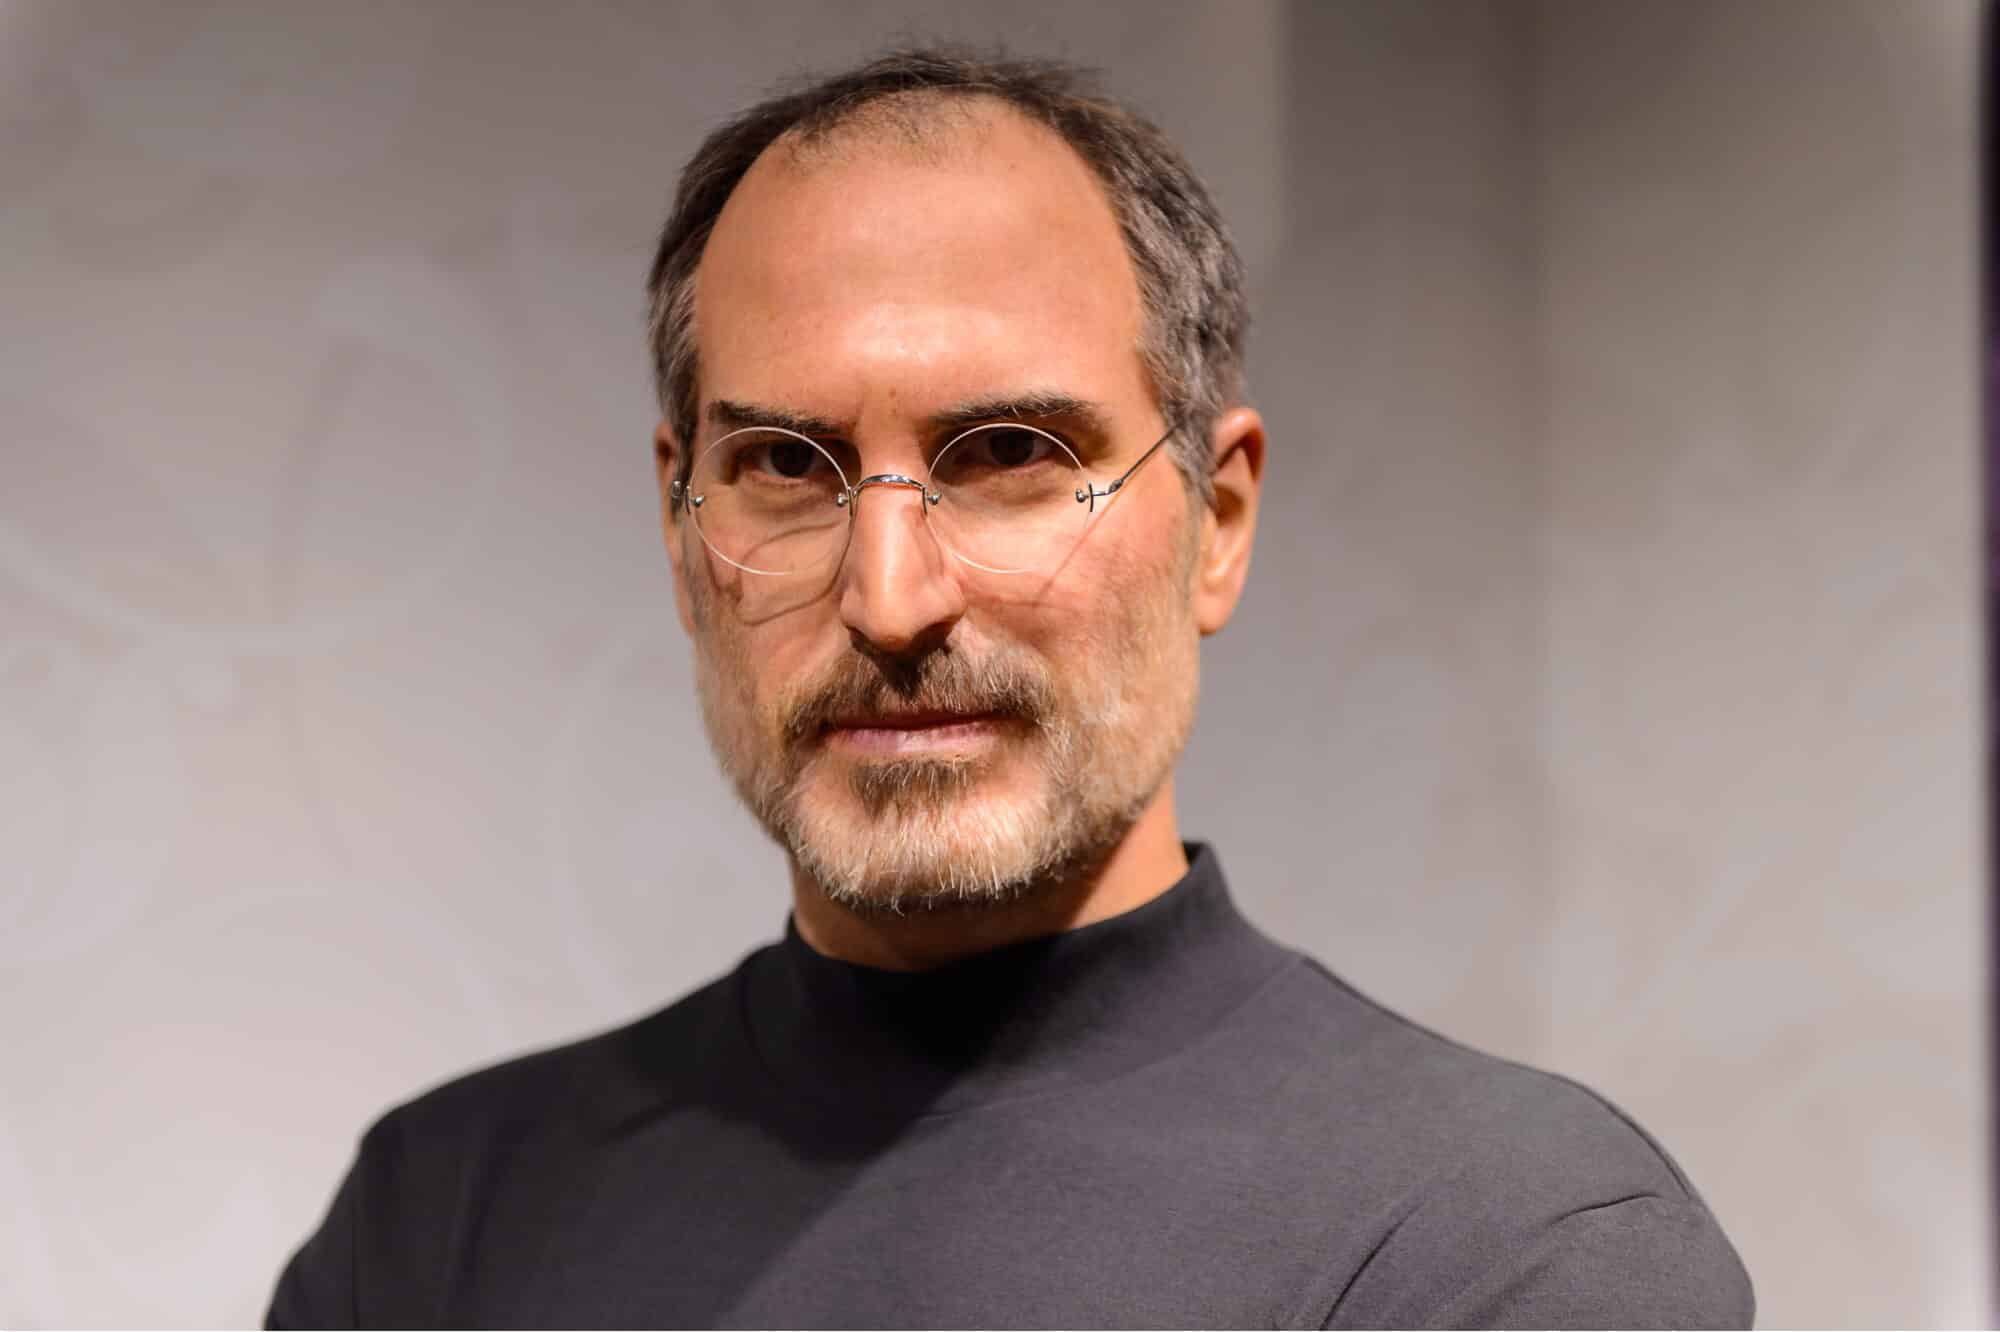 Steve Jobs personal branding